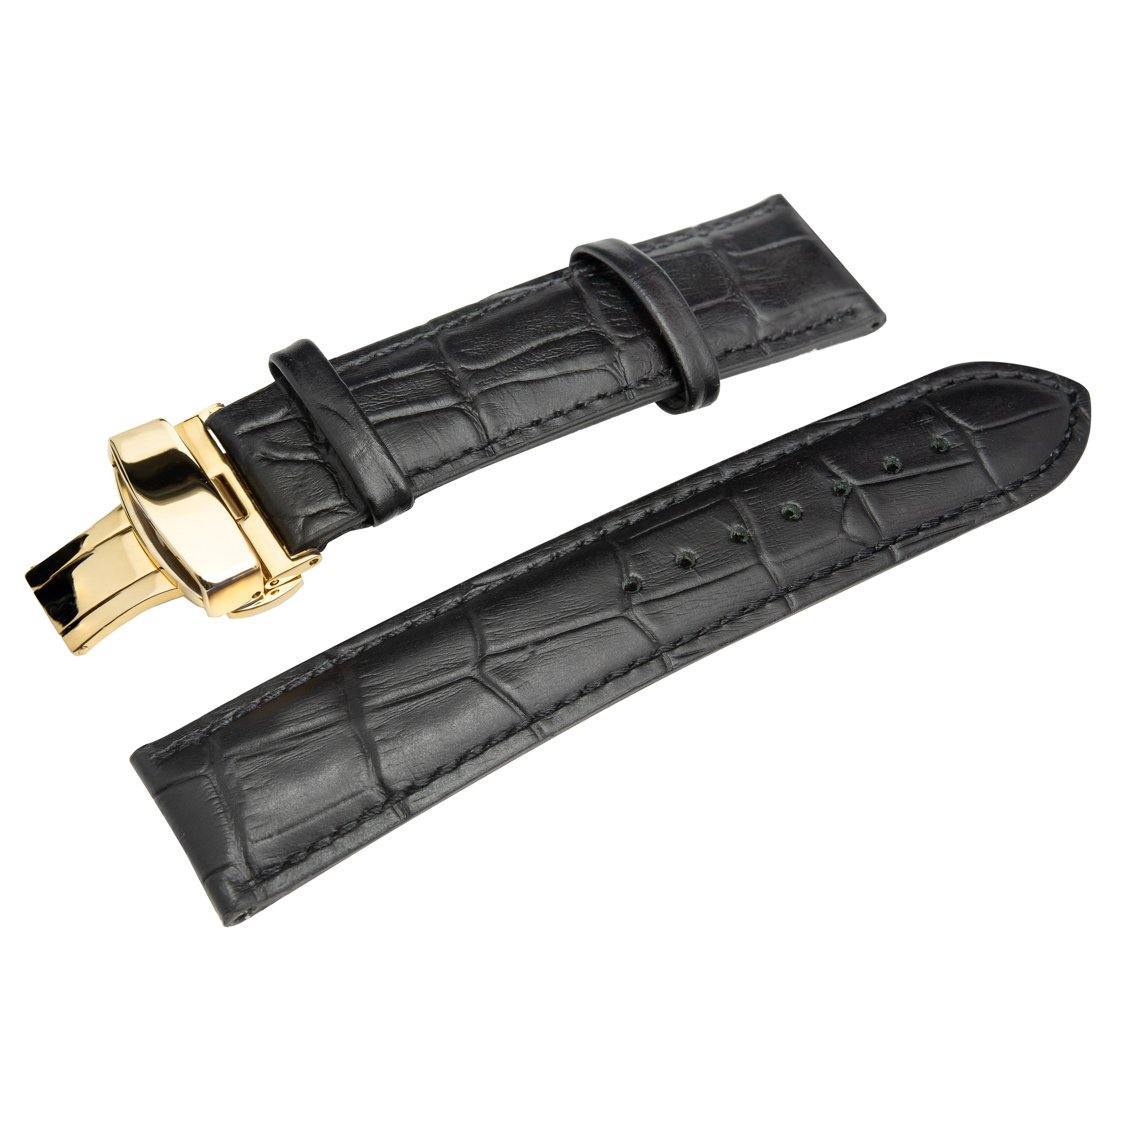 SÖNER HERITAGE C - Alligator strap in black leather SÖNER Watch straps.